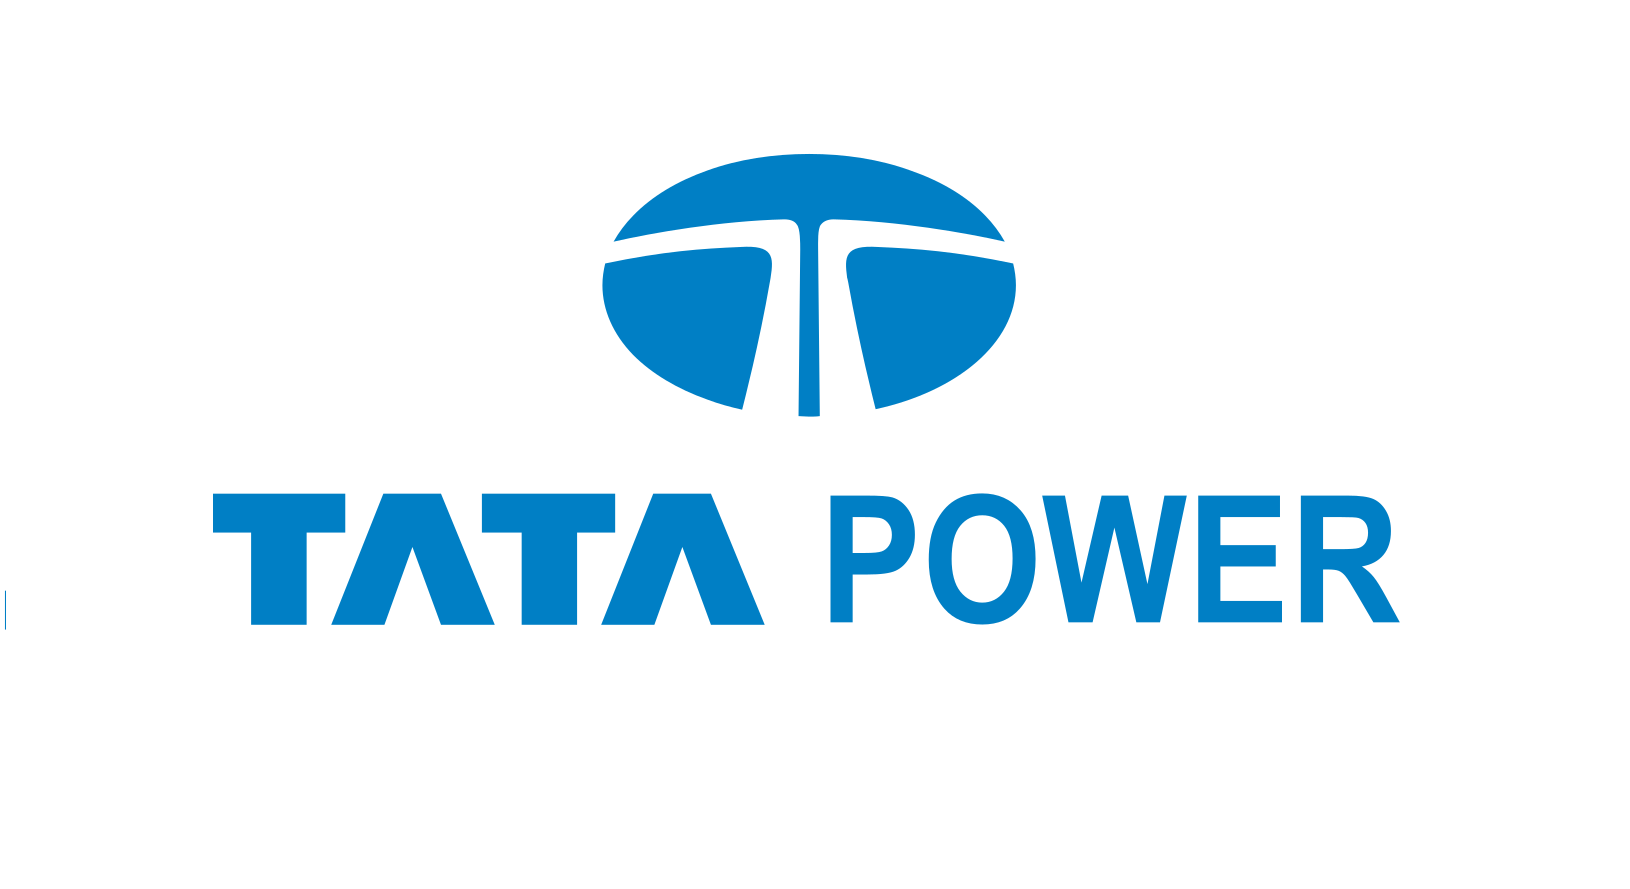 tata-power-ranks-among-top-20-companie-sunder-the-indian-corporate-governance-scorecard-2021